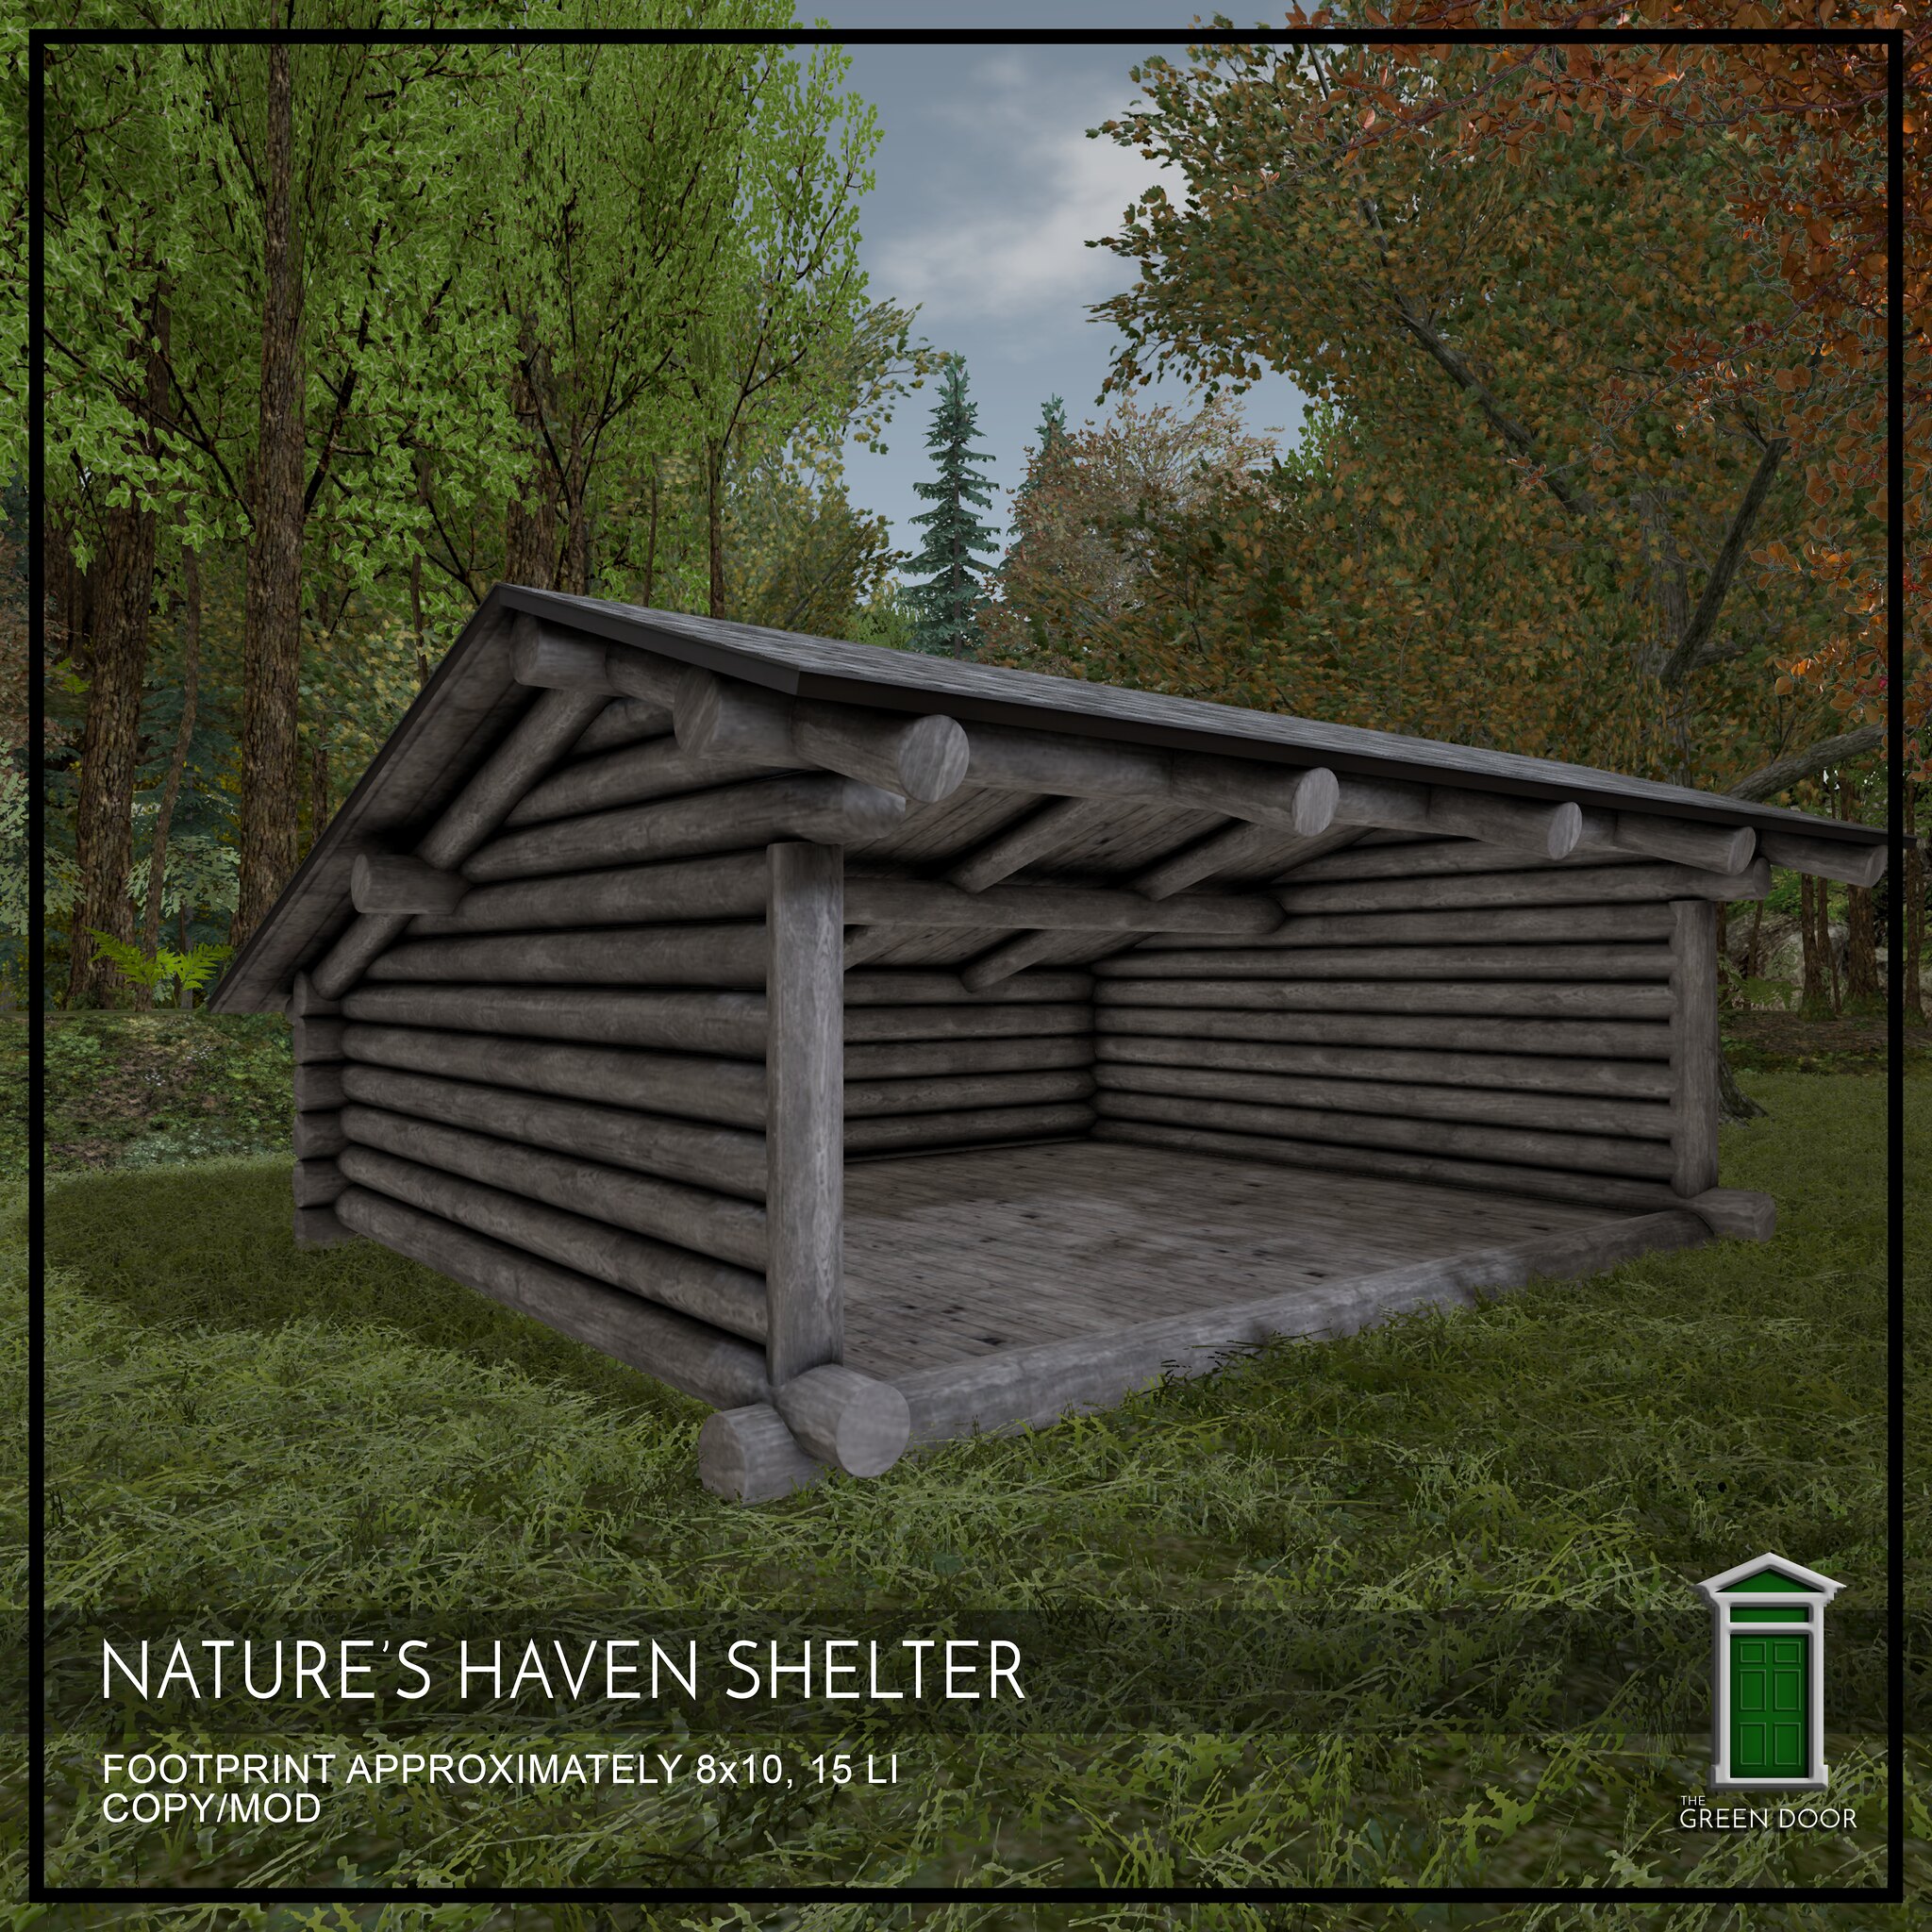 The Green Door – Nature’s Haven Shelter